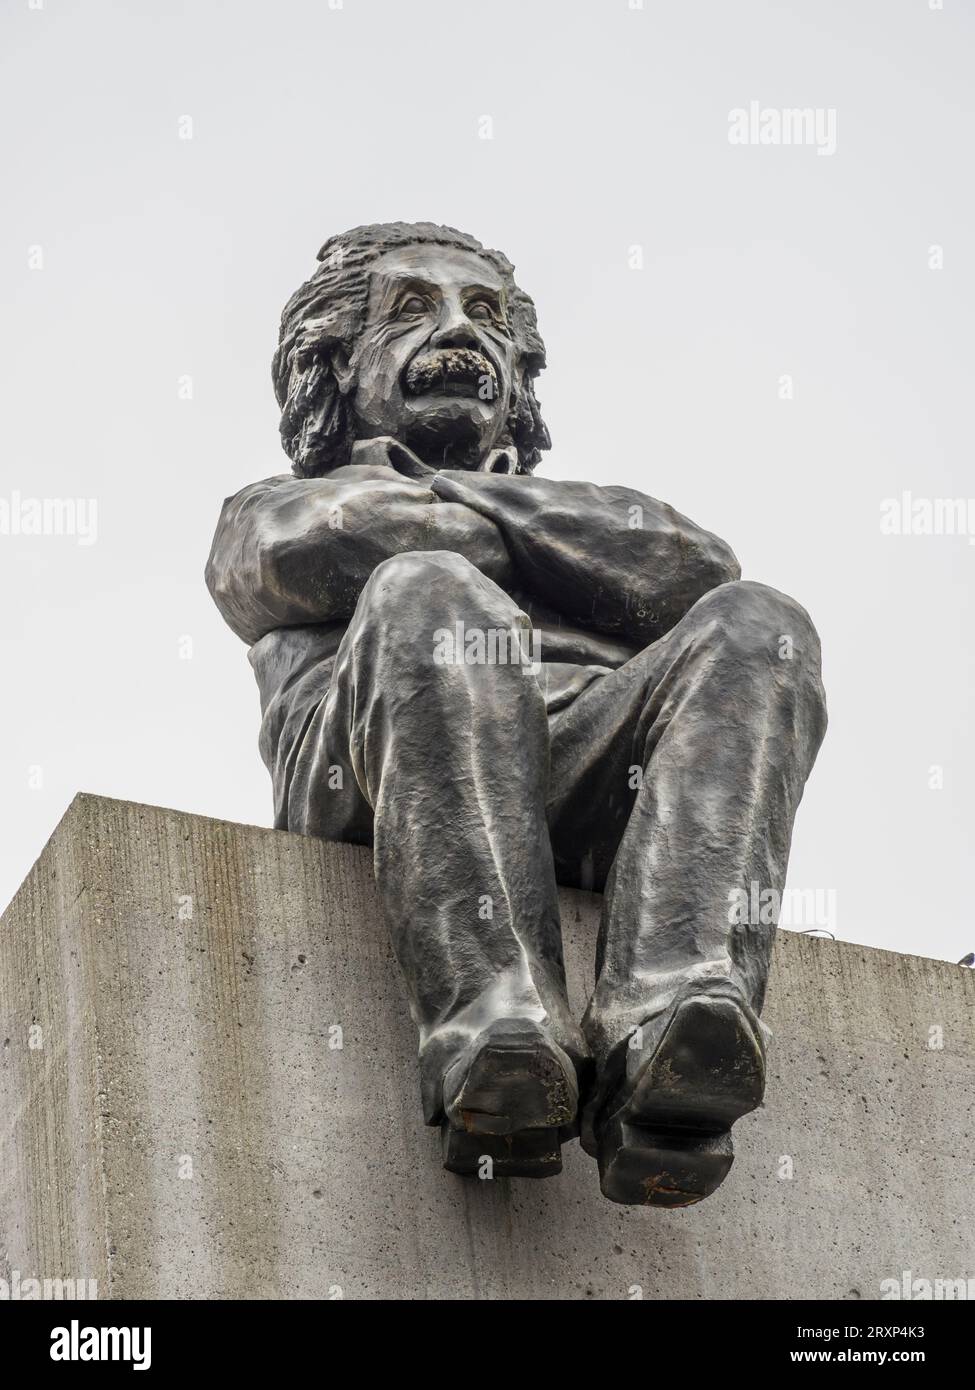 Sculputure of Albert Einstein sitting on the edge of a block, school for professionals, Baden, Aargau, Switzerland Stock Photo